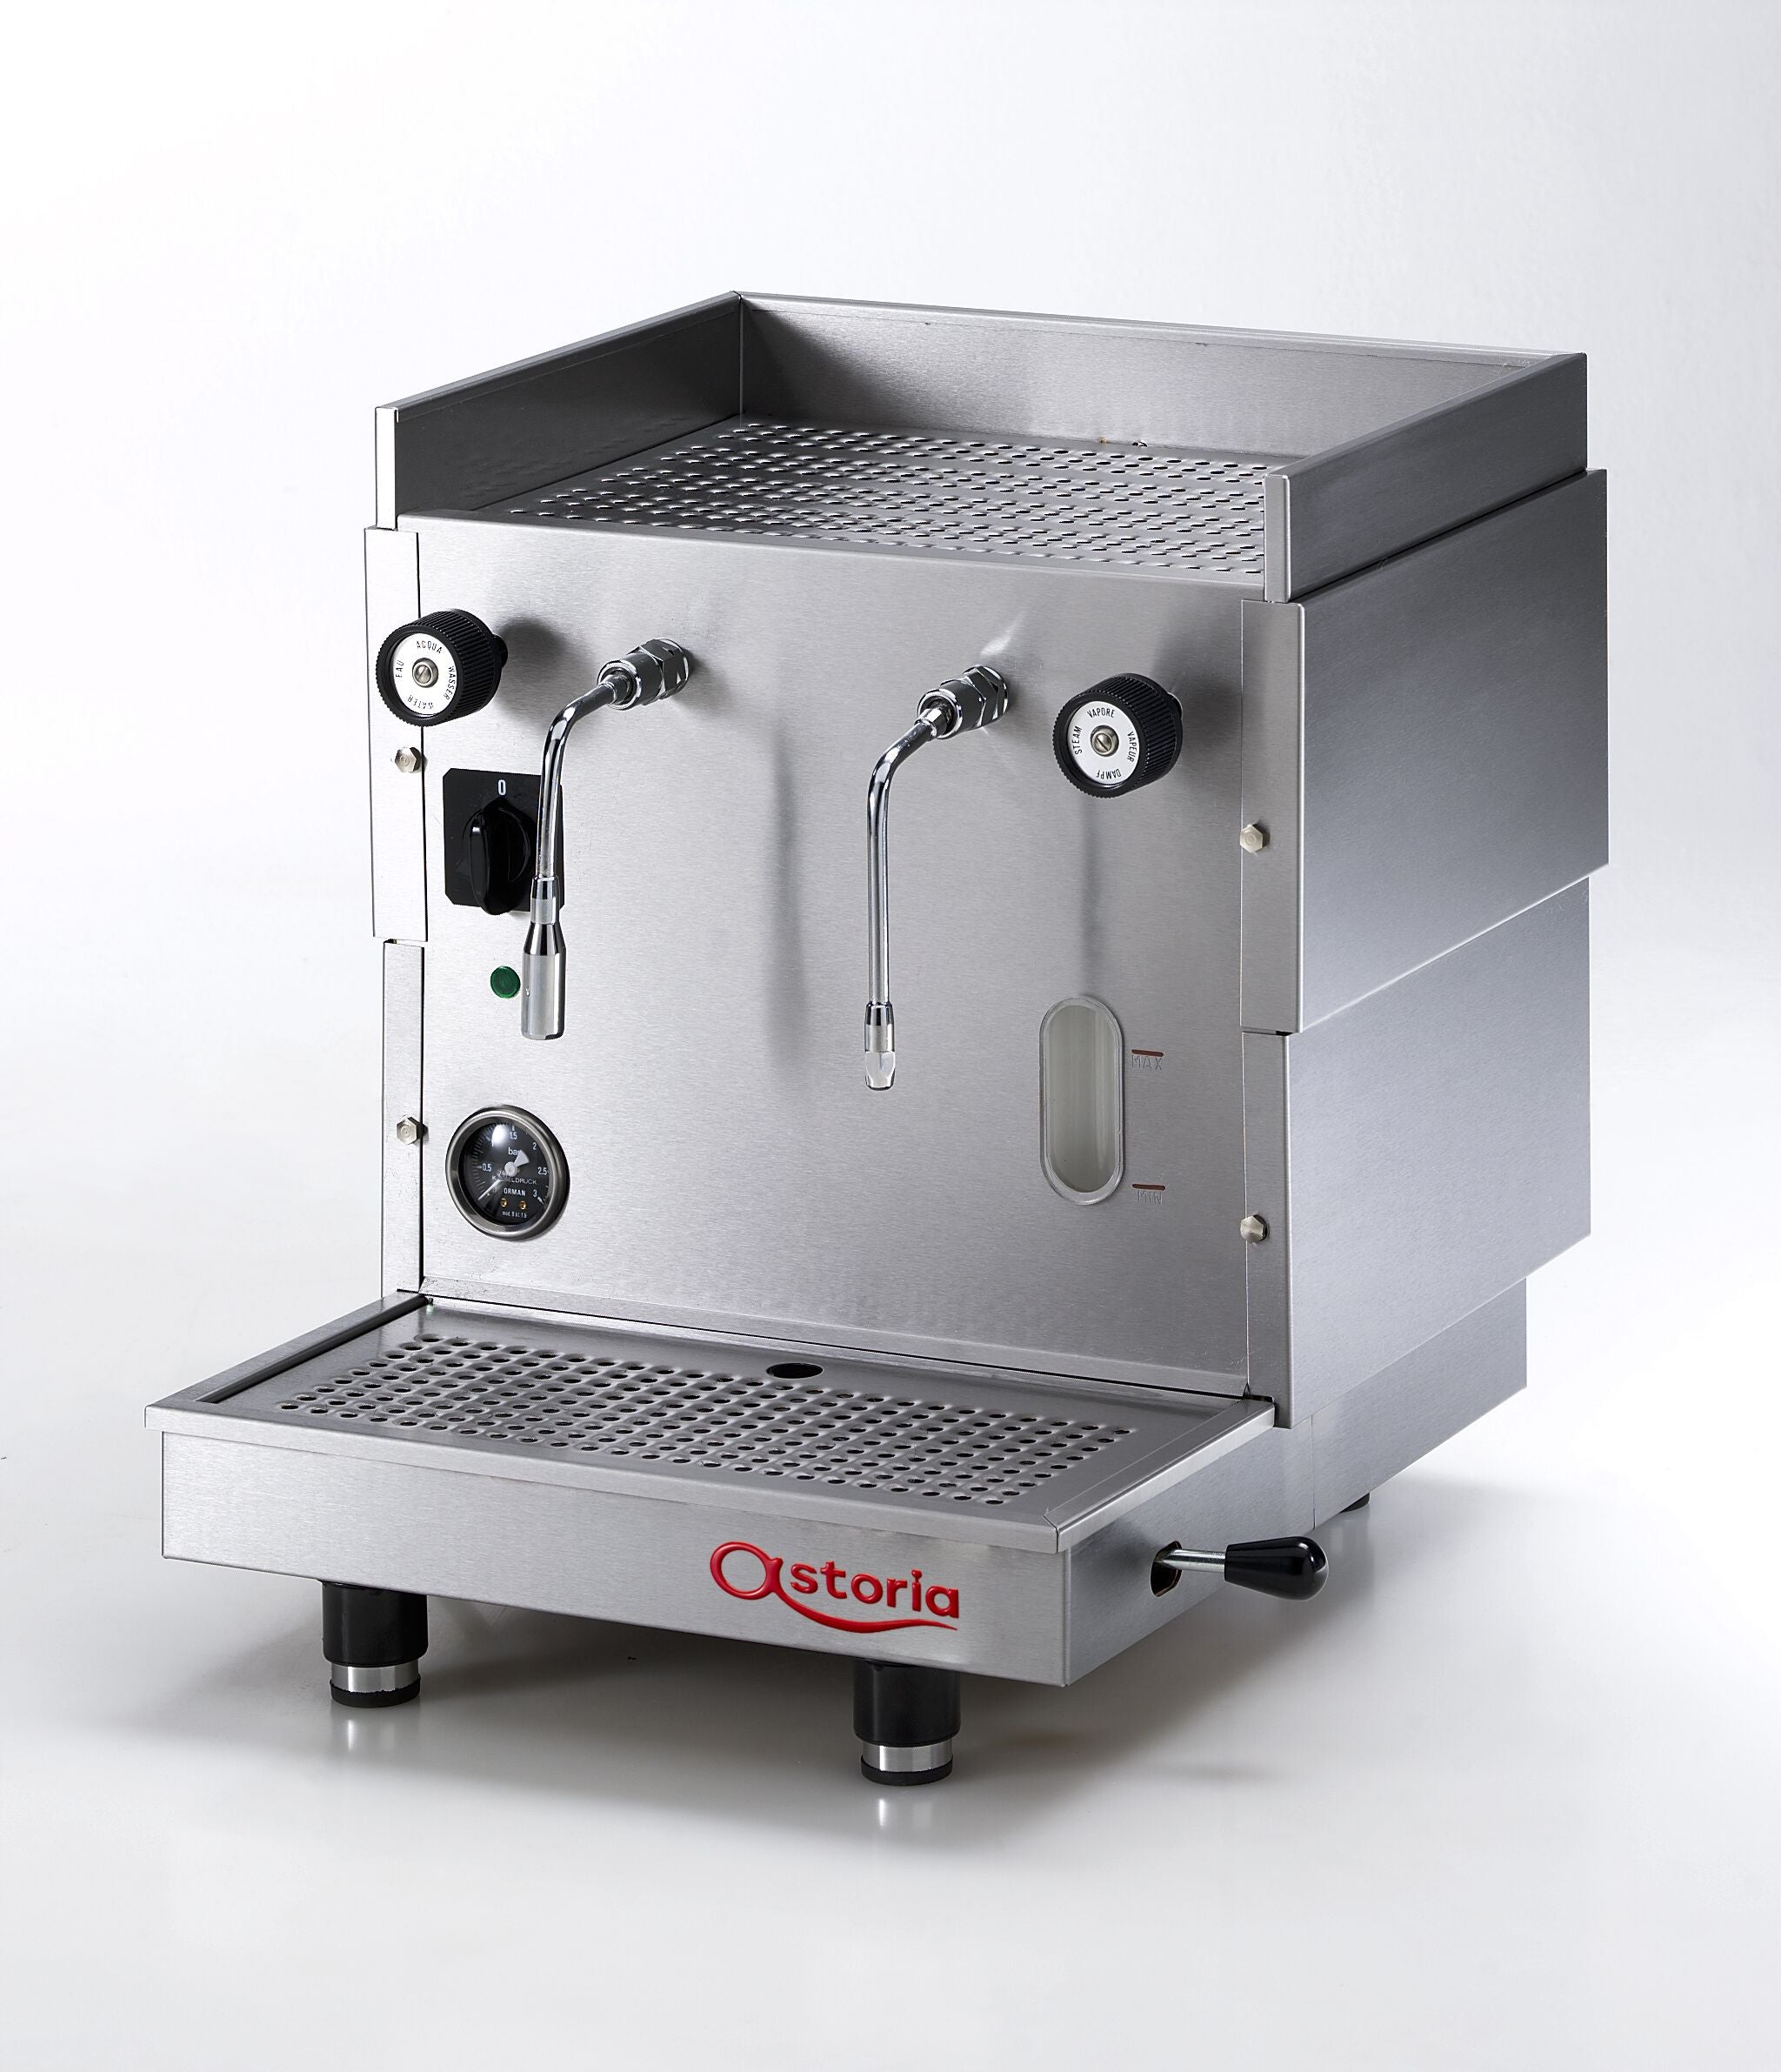 Stand-alone steamer - Espresso Machines